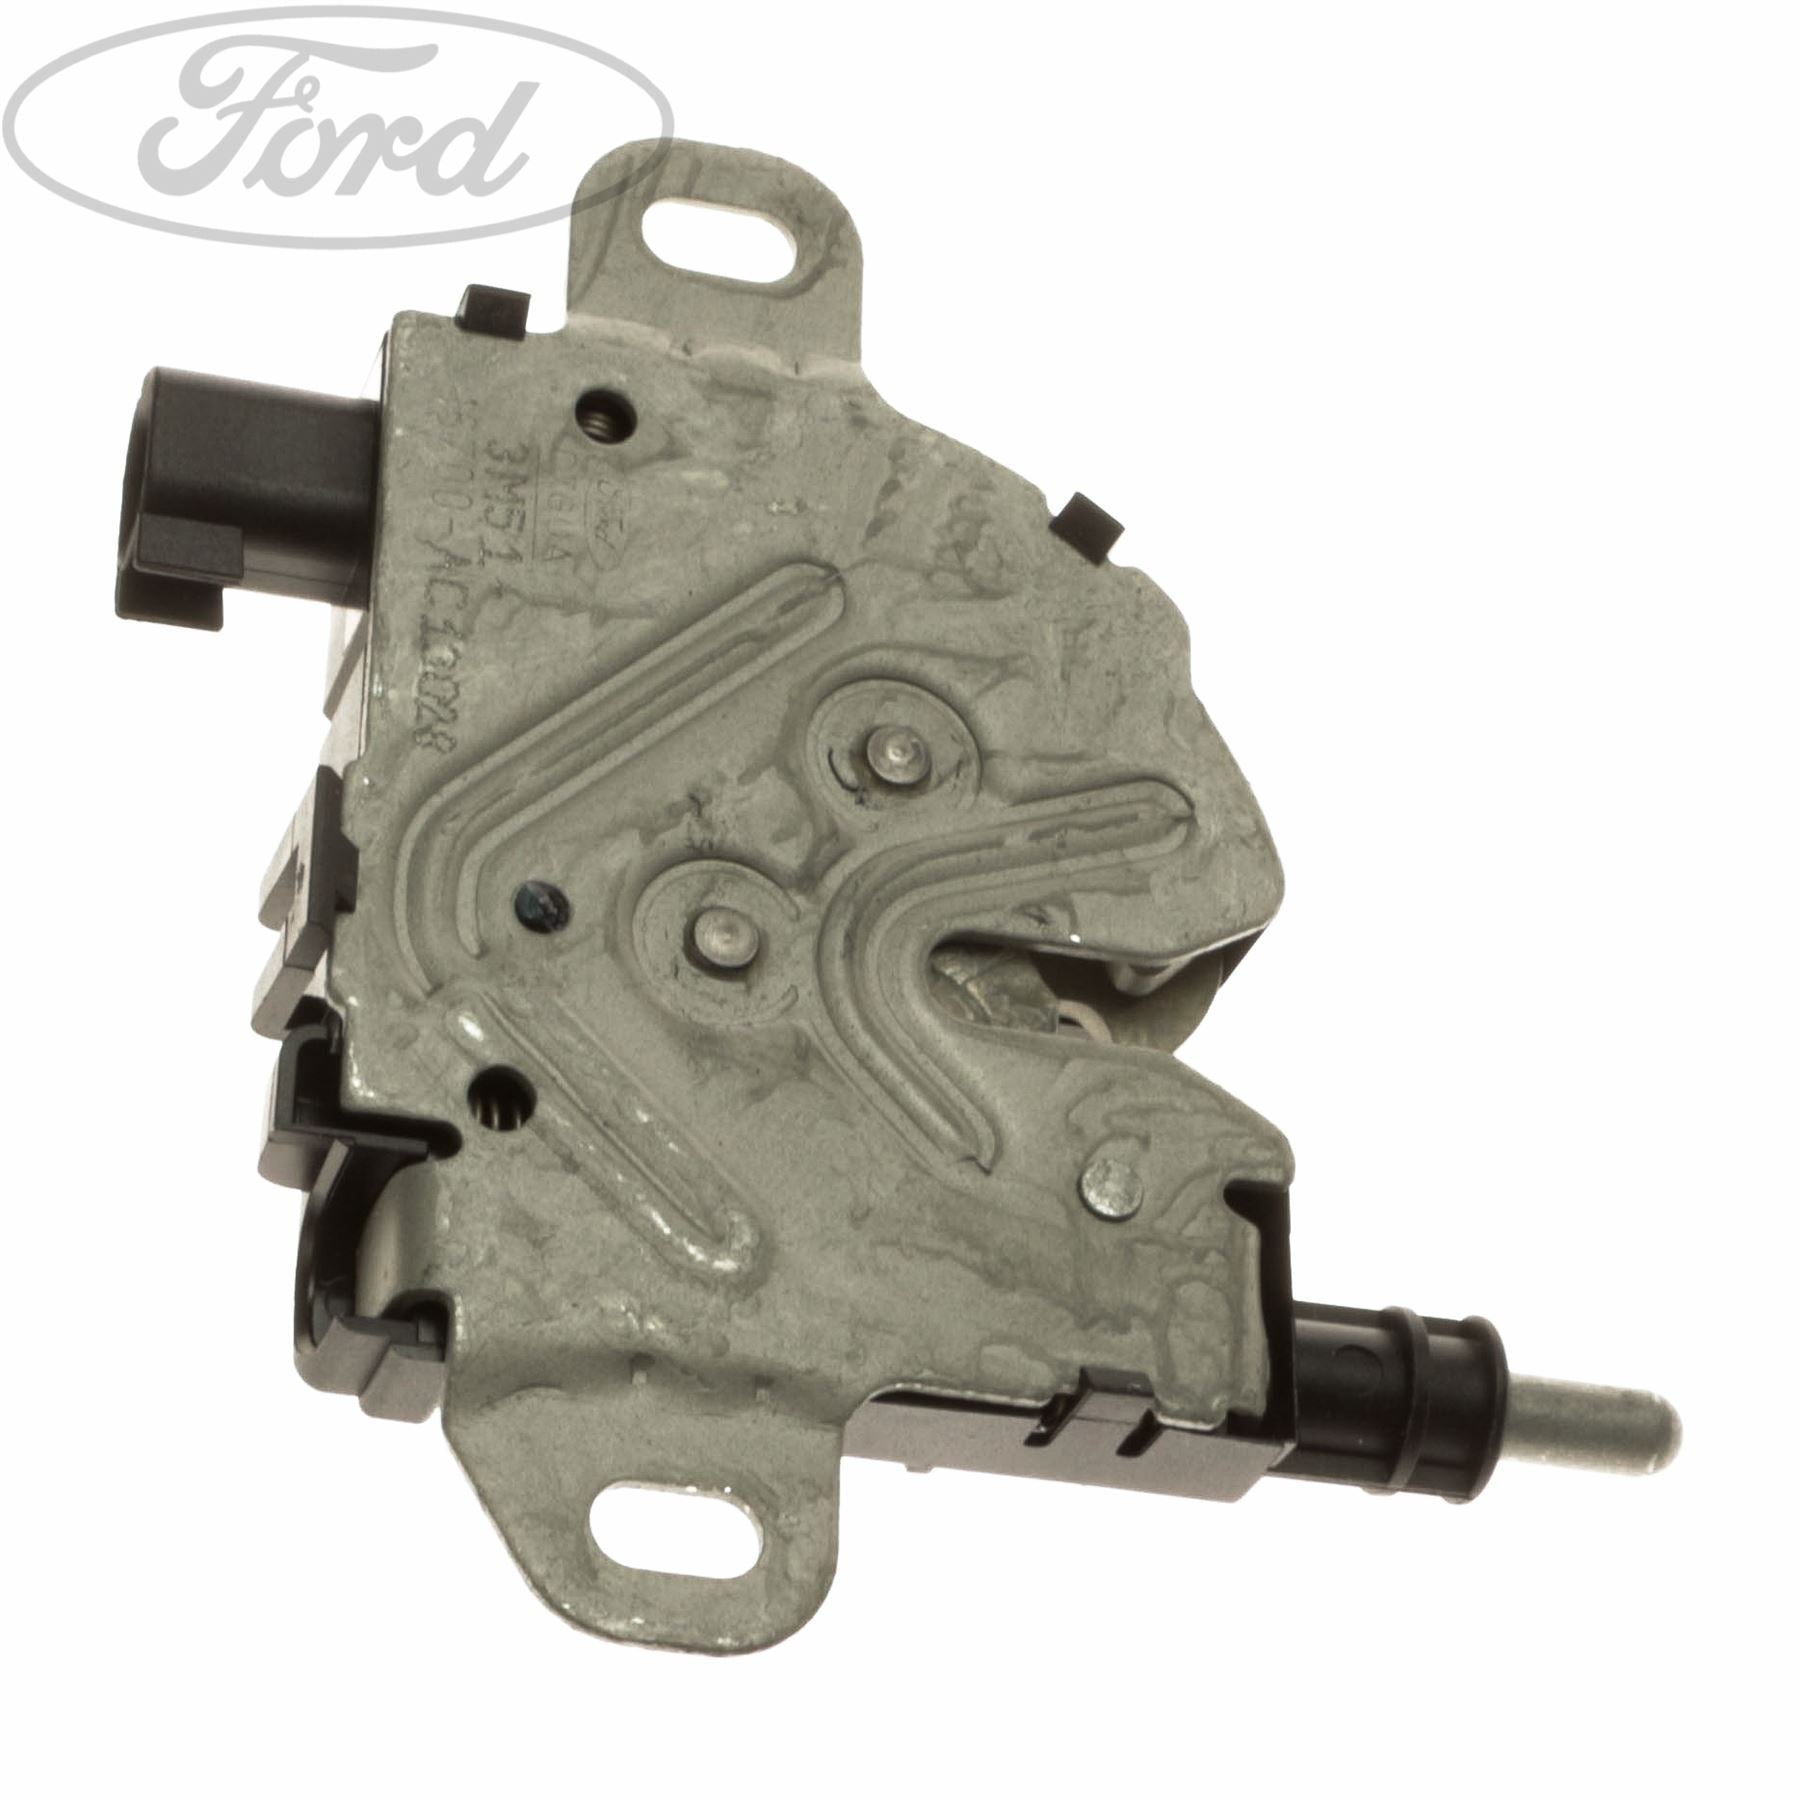 Für Ford Focus Motorhaube Motorhaube Schloss Riegel Reparatursatz